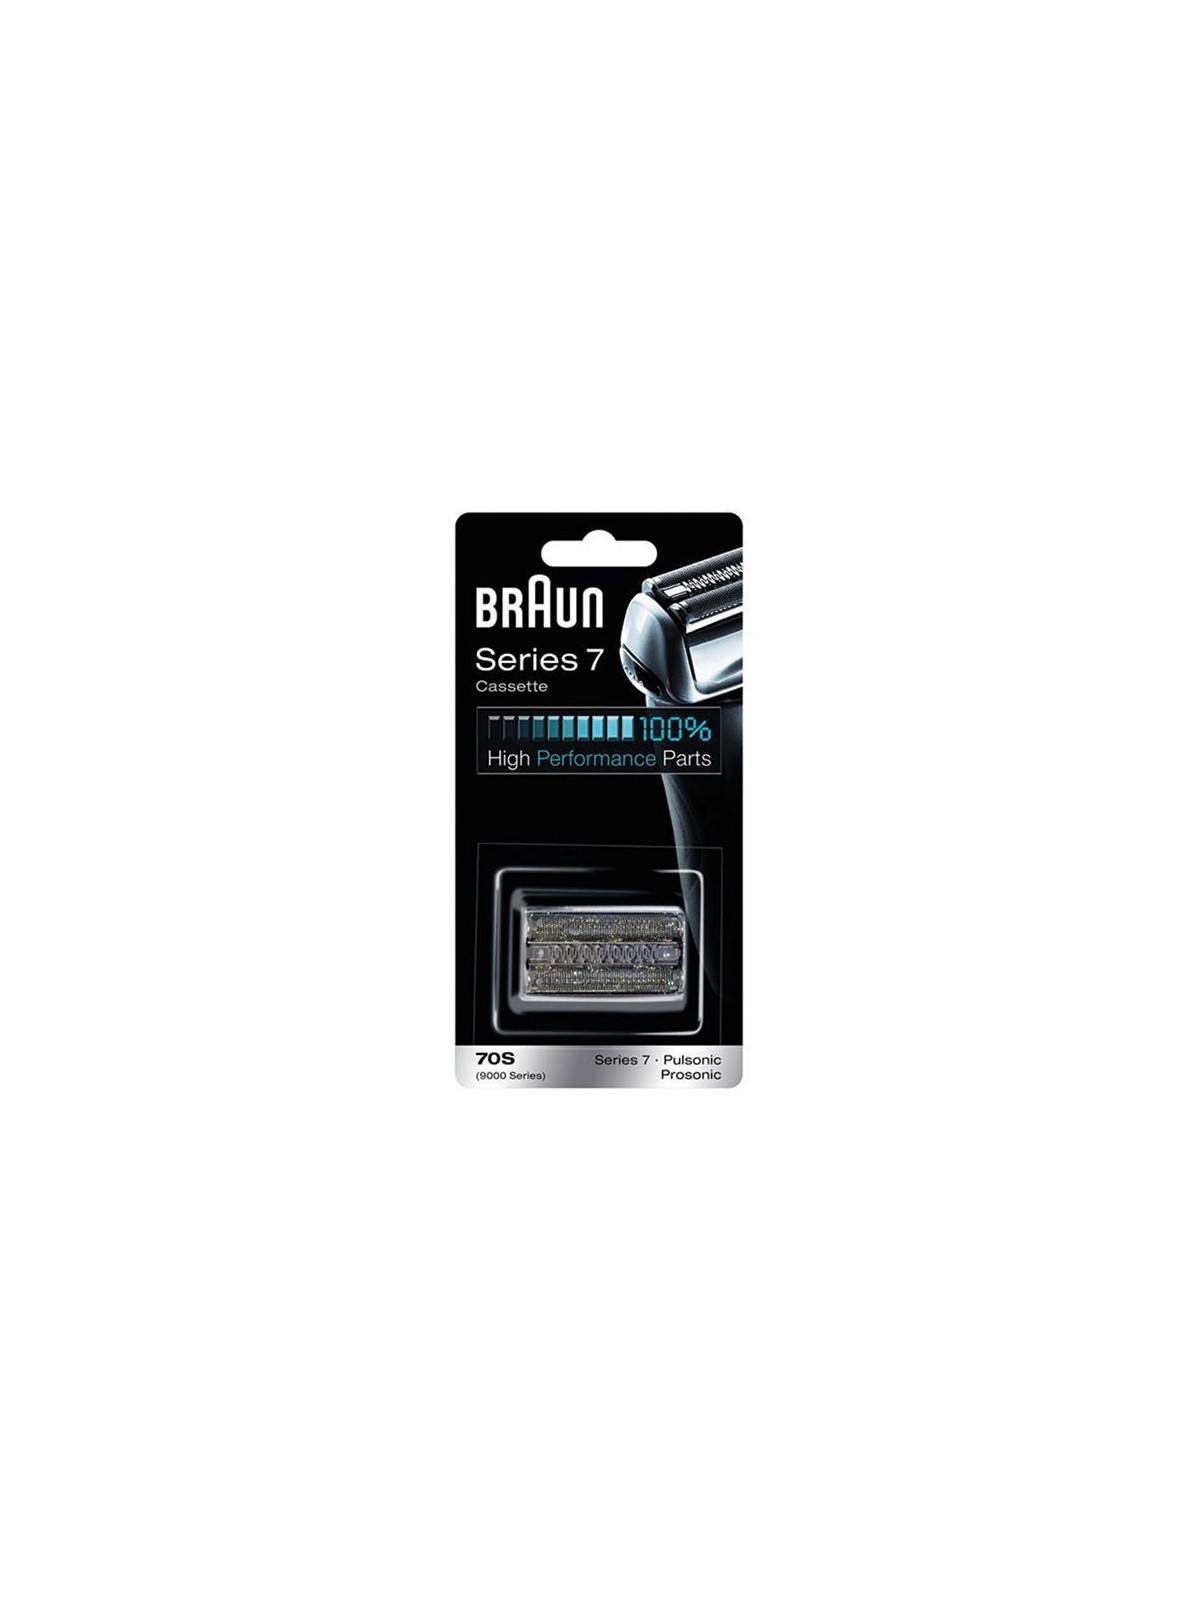 Cassette de rasage Braun Pulsonic / Prosonic 9000 series - Rasoir